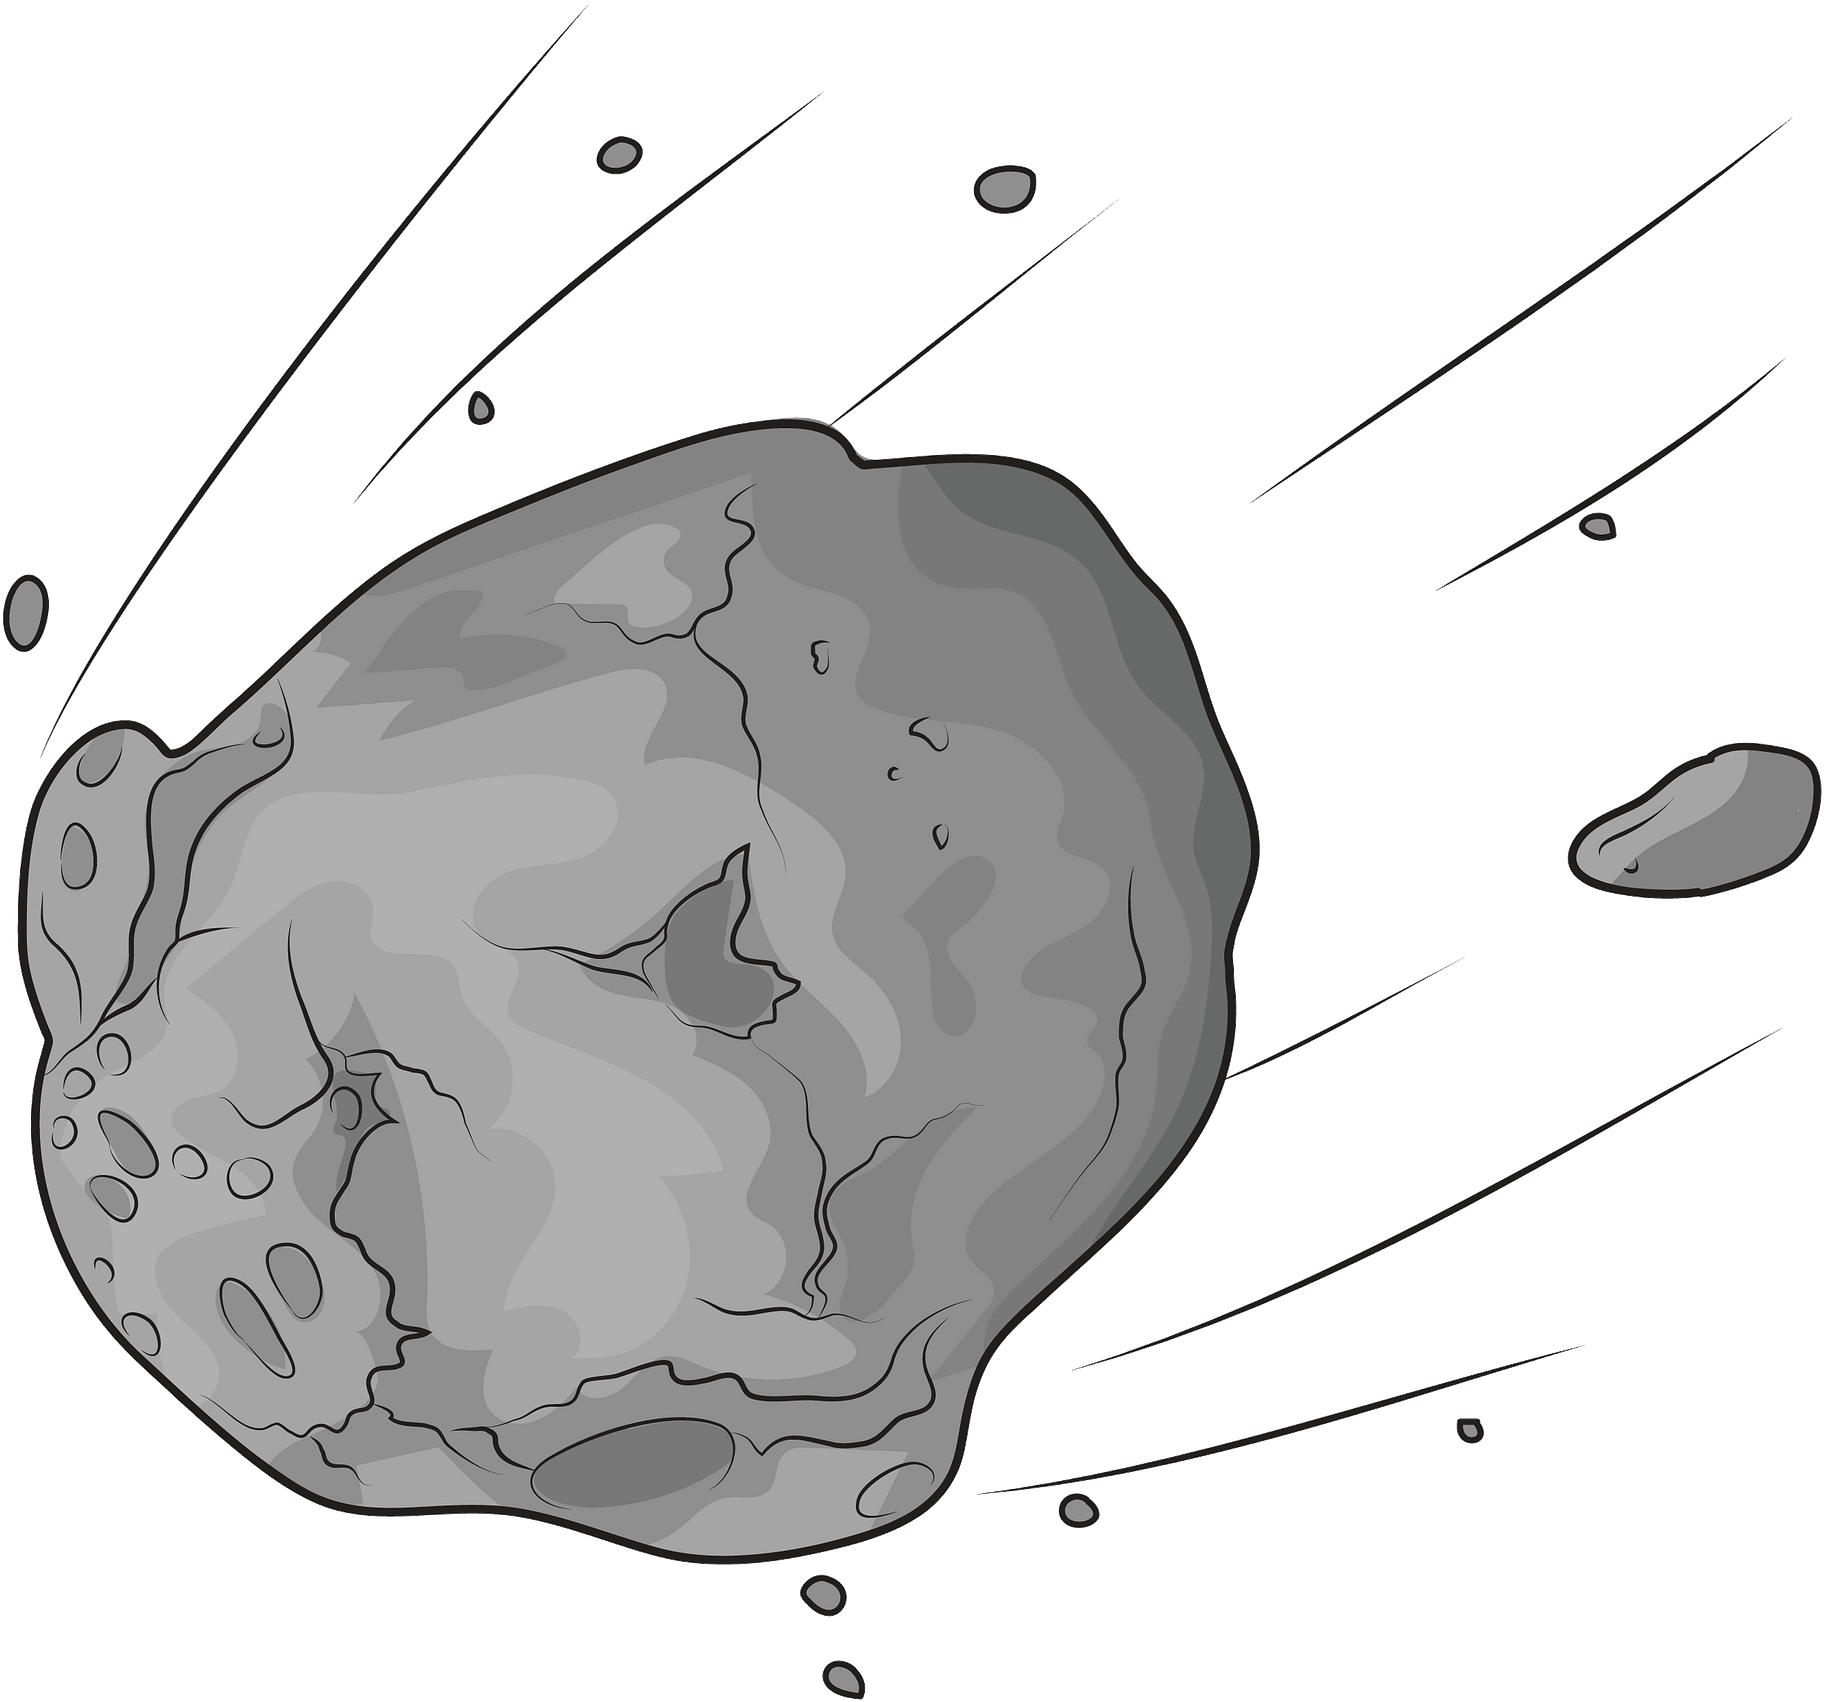 Космос - Солнечная система - Пояс астероидов, Asteroid Belt - Метеоритика, Метеорная астрономия, Meteoric Astronomy - Метеор, Метеорит, Метеорный поток - Вулканоиды, Volcanoids - День астероида 30 июня